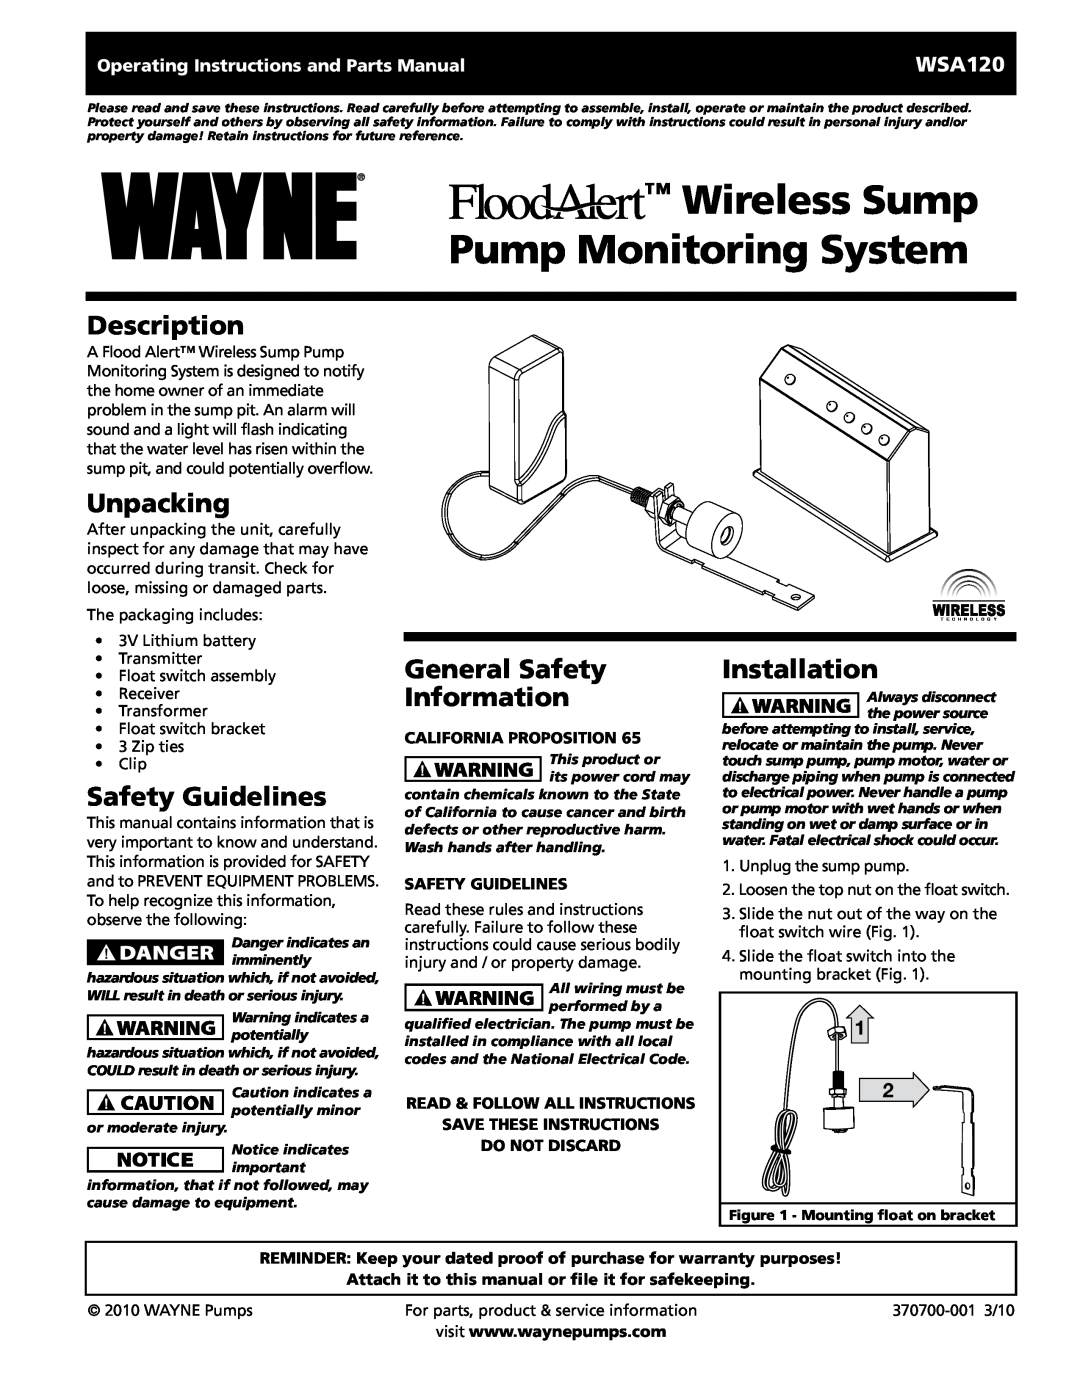 Wayne 370700-001 warranty Description, Unpacking, Safety Guidelines, General Safety Information, Installation, WSA120 